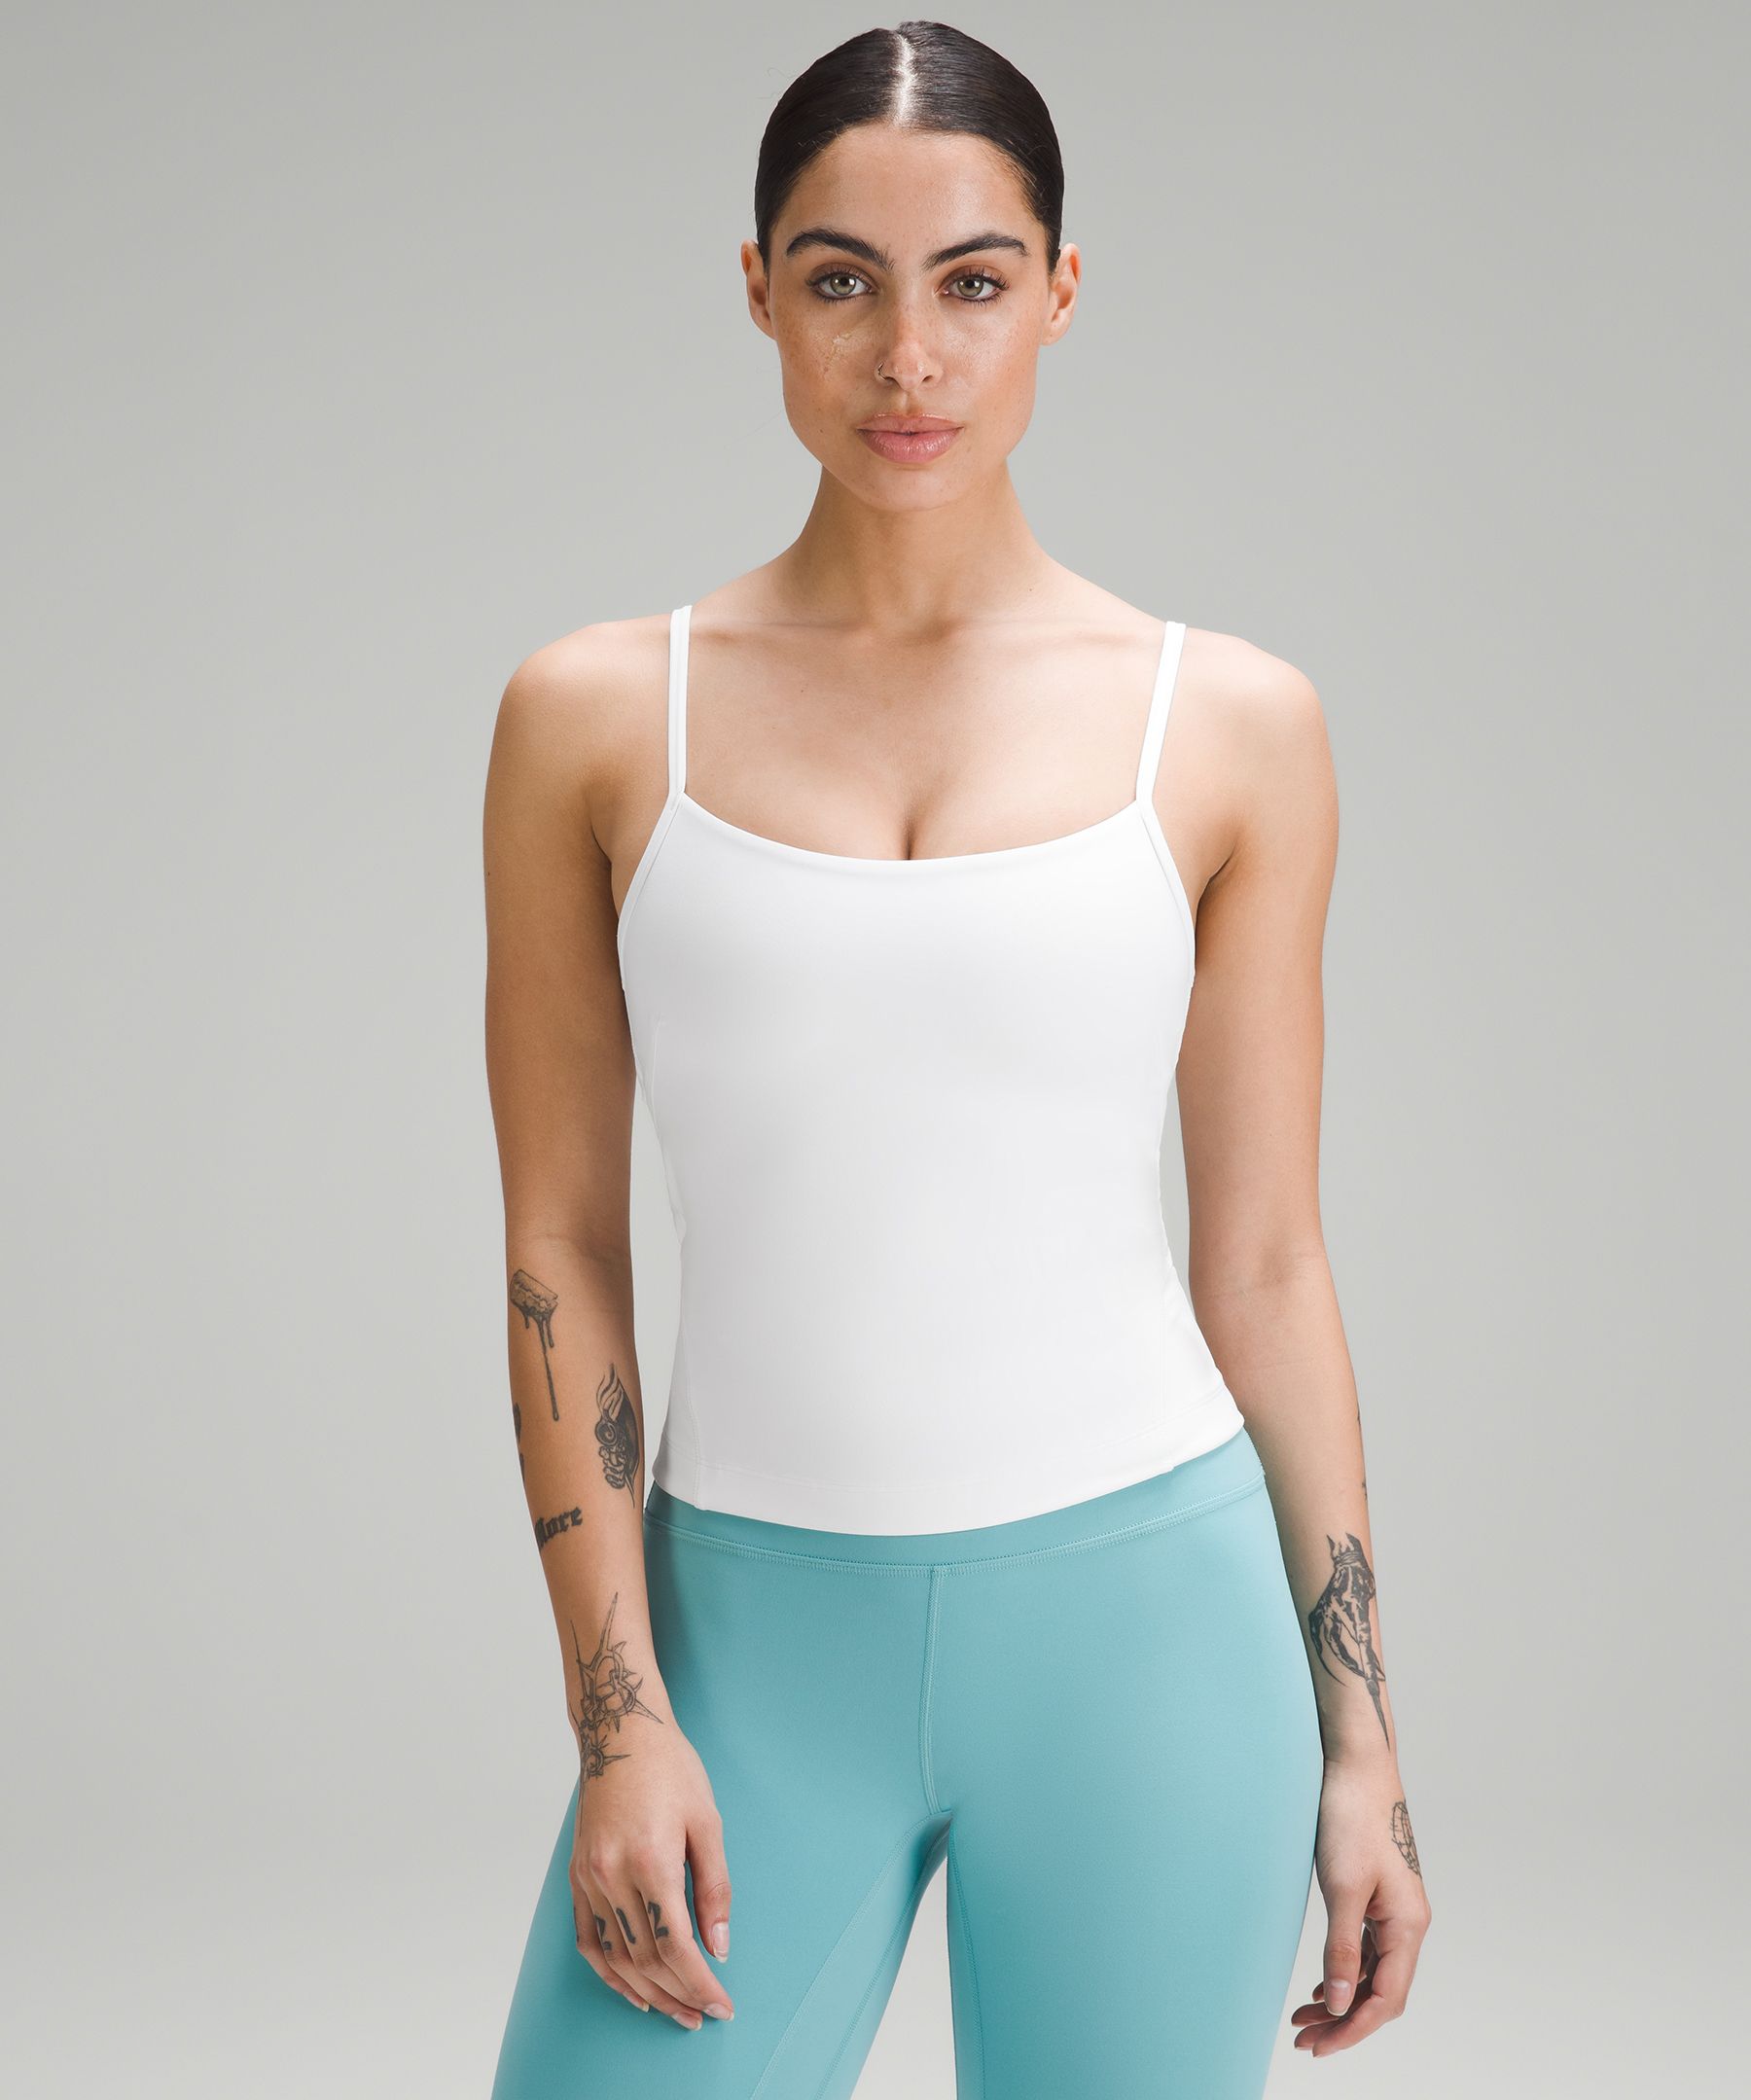 Yoga Top with Bra Cross Back 2 In 1 Set Sleeveless Yoga Shirt